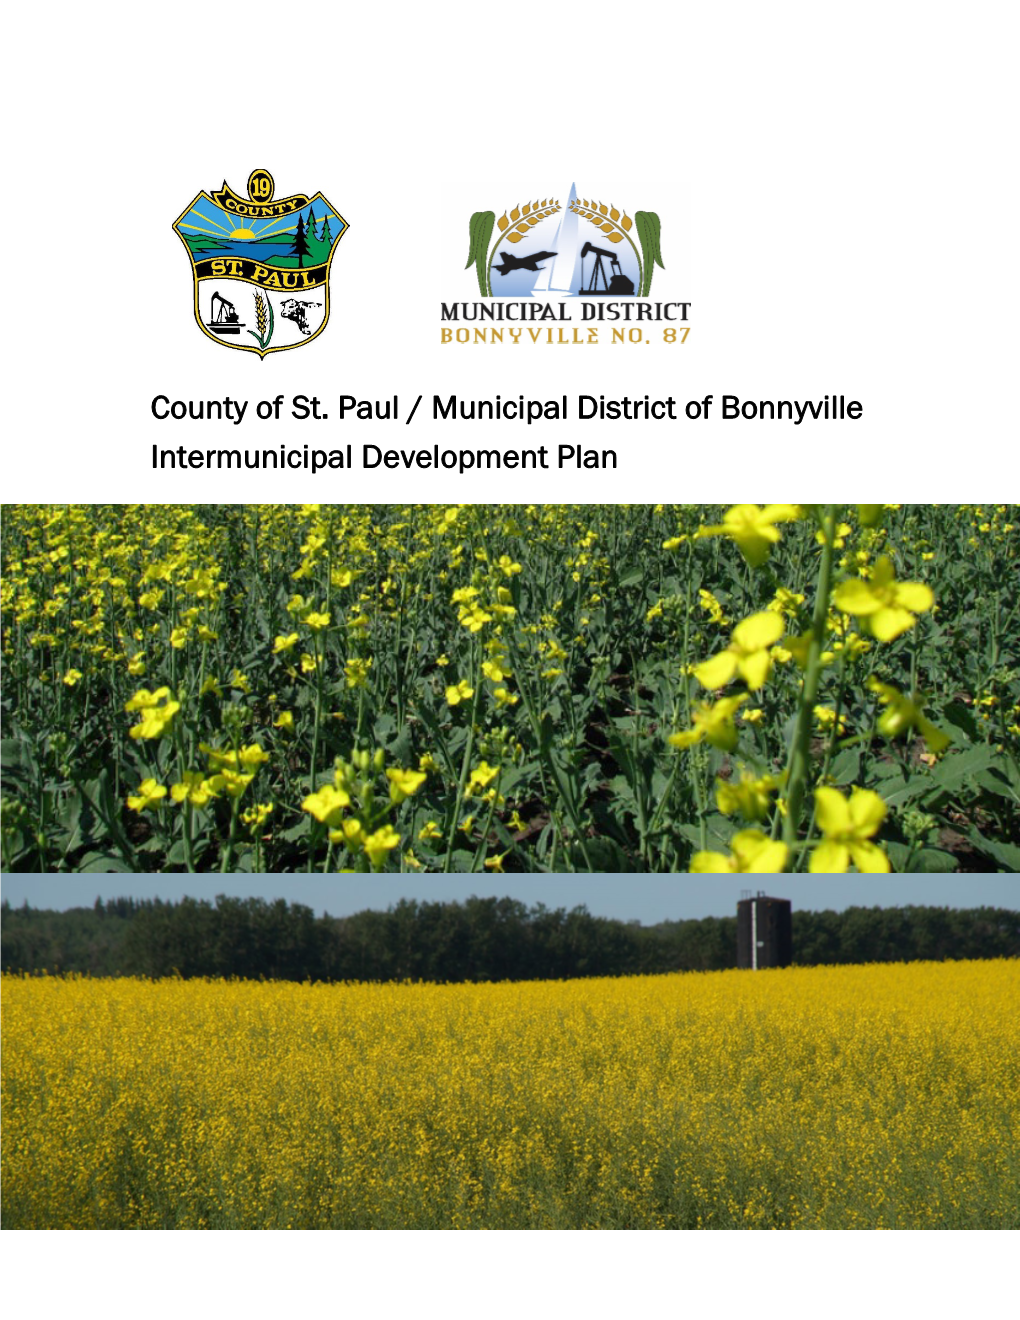 County of St. Paul / Municipal District of Bonnyville Intermunicipal Development Plan